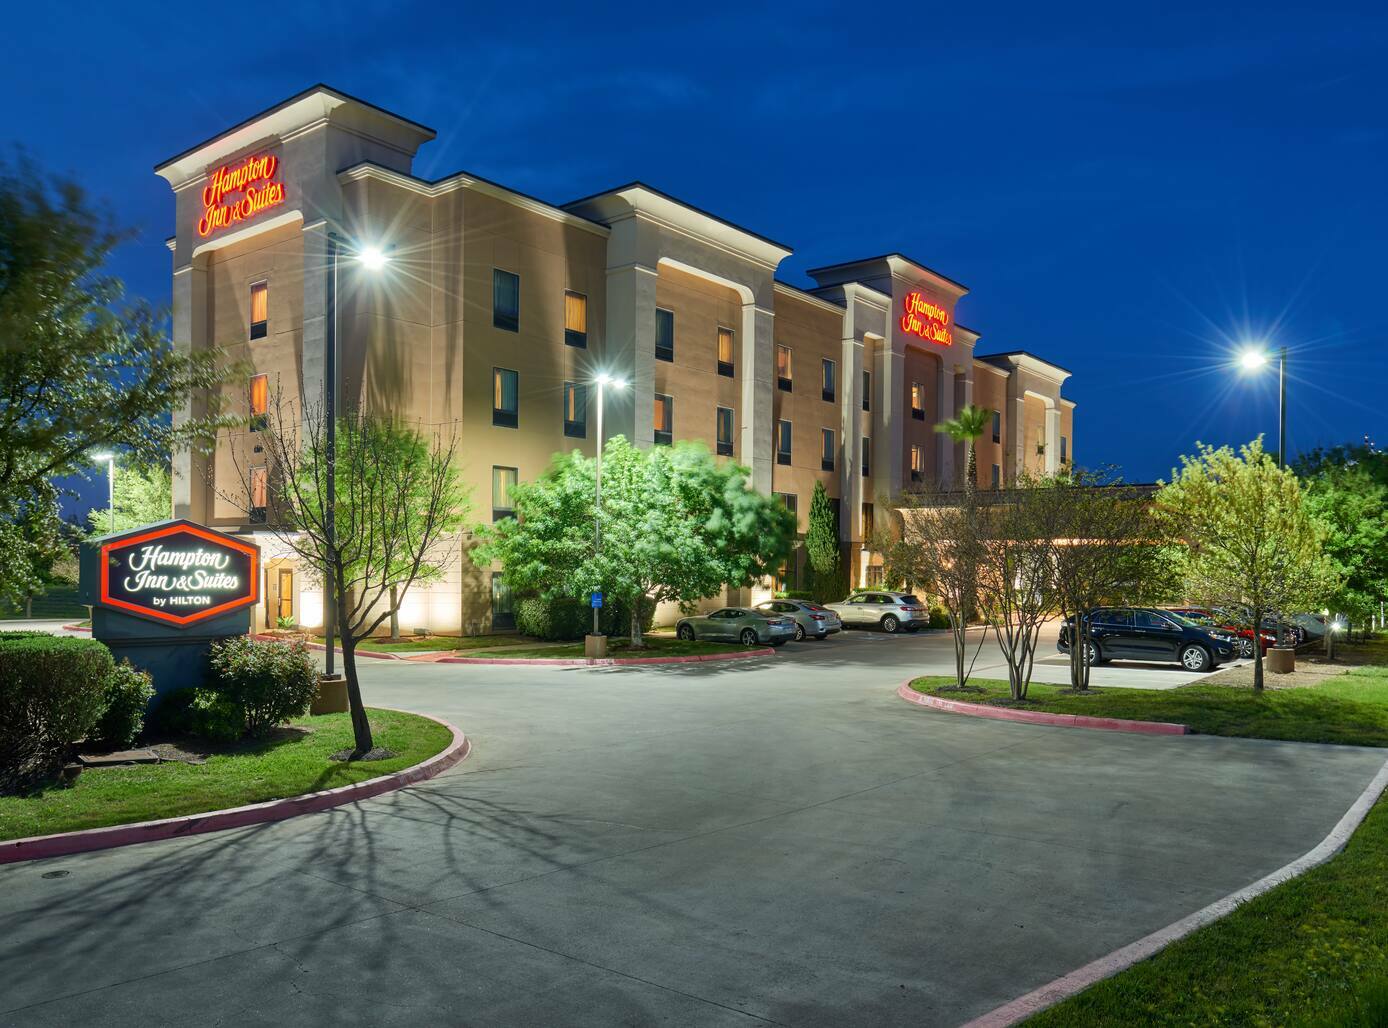 Photo of Hampton Inn & Suites Austin South/Buda, Buda, TX